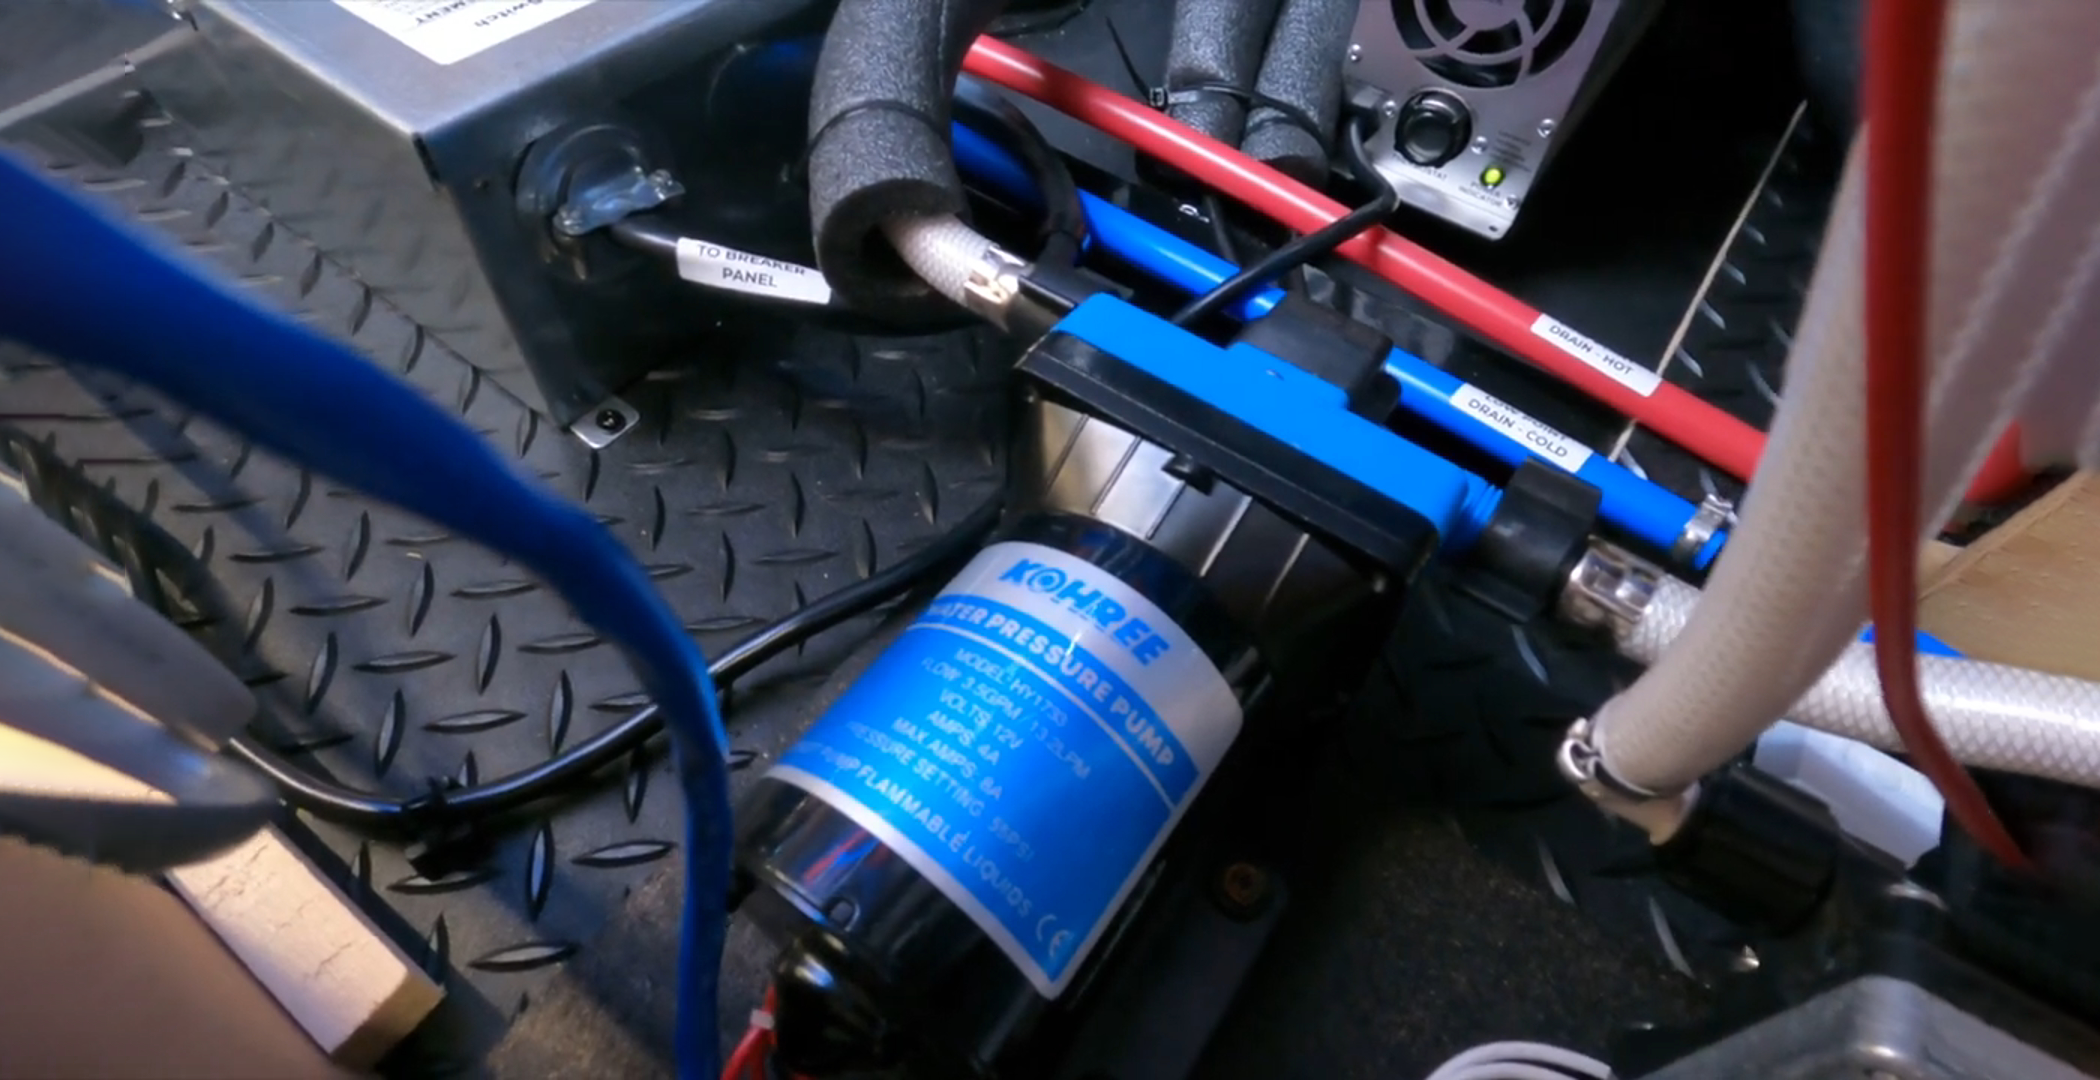 Reliable Kohree RV Pump Review by @AdventureRocks